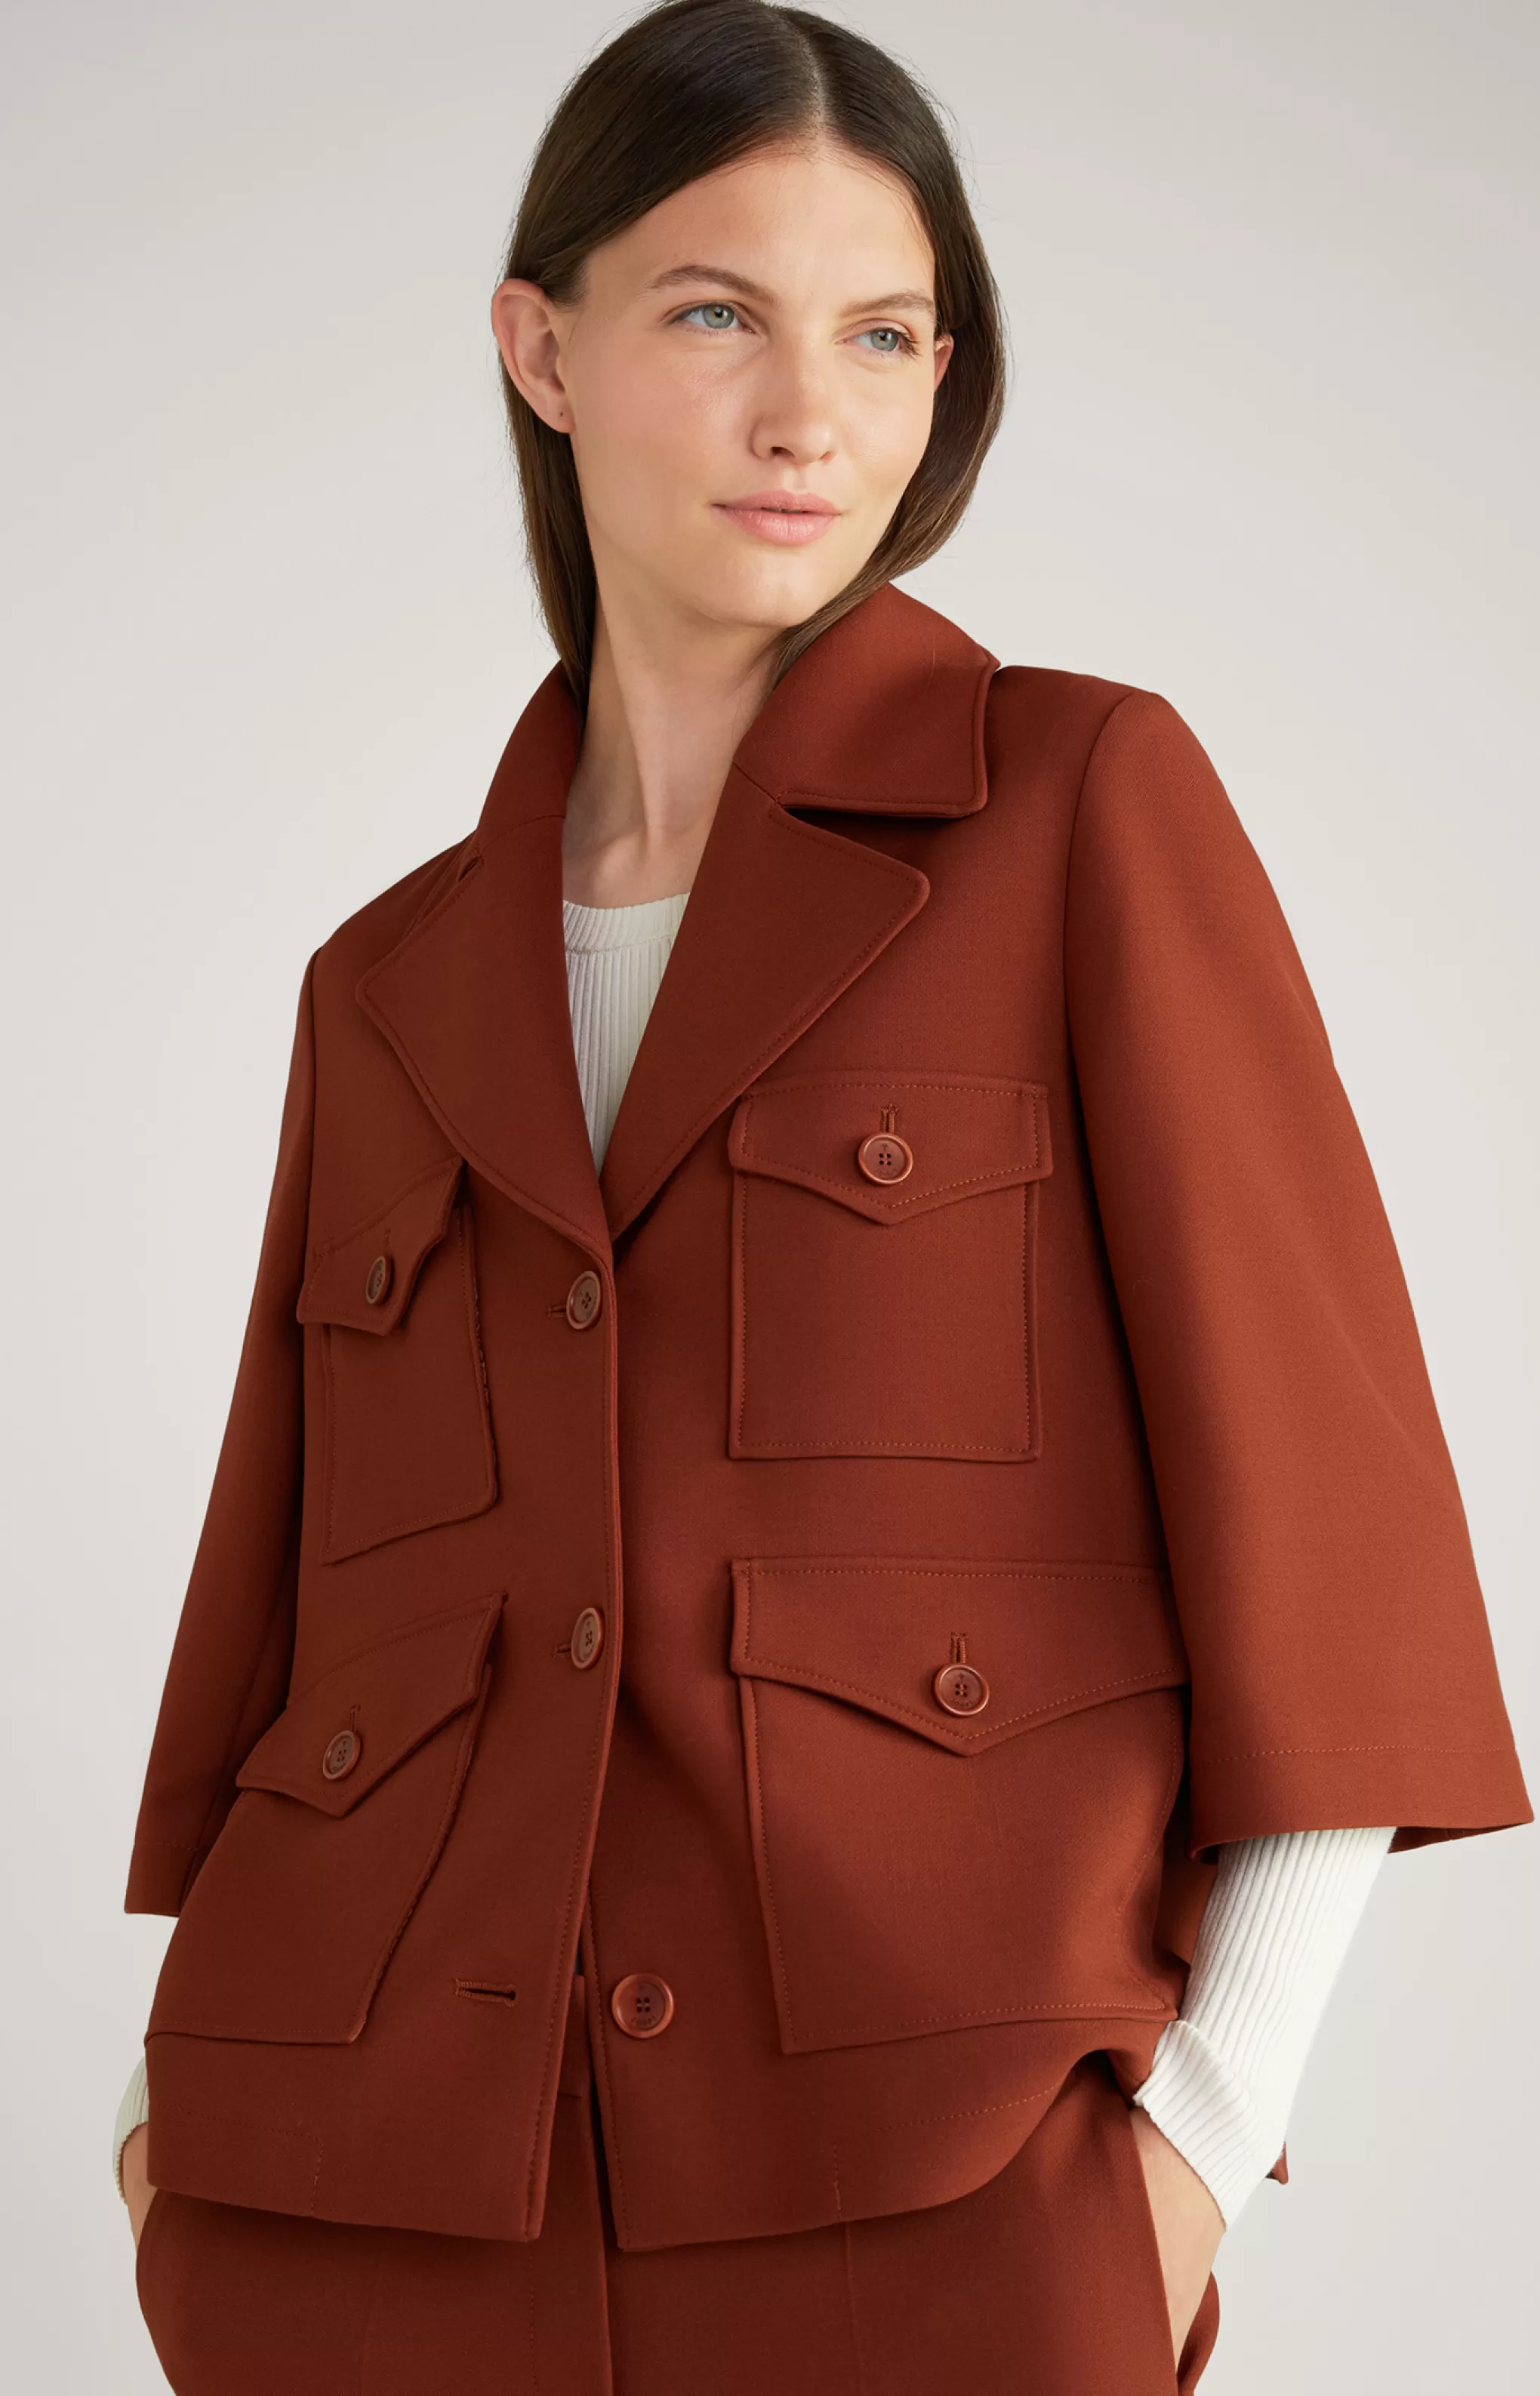 Jackets And Coats | Blazers | Clothing*JOOP Jackets And Coats | Blazers | Clothing Blazer Jacket in